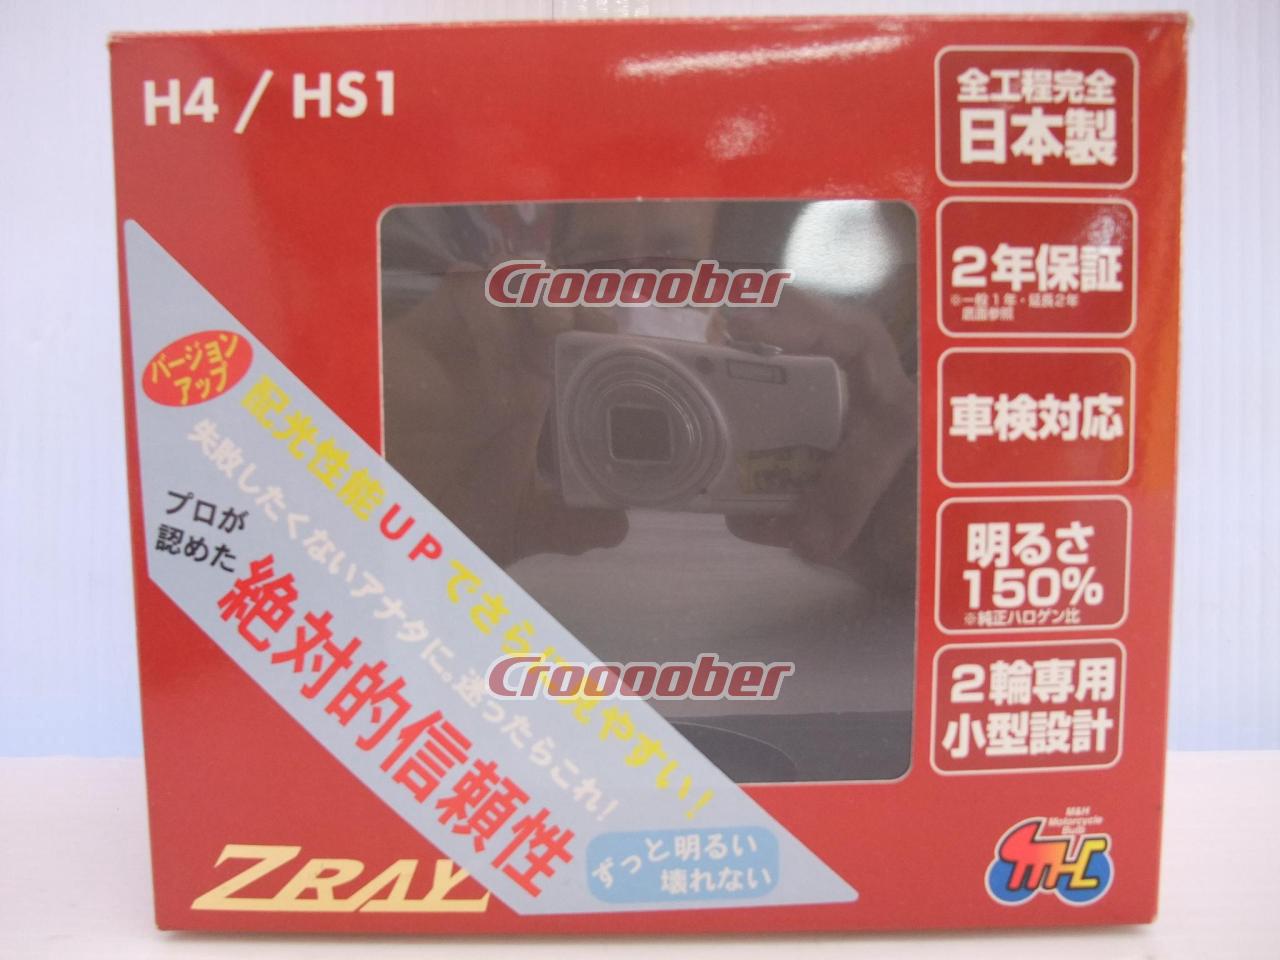 ZRAY×M&Hマツシマ LEDヘッドライTバルブ 品番:ZM1631-65 【H4/HS1型DC